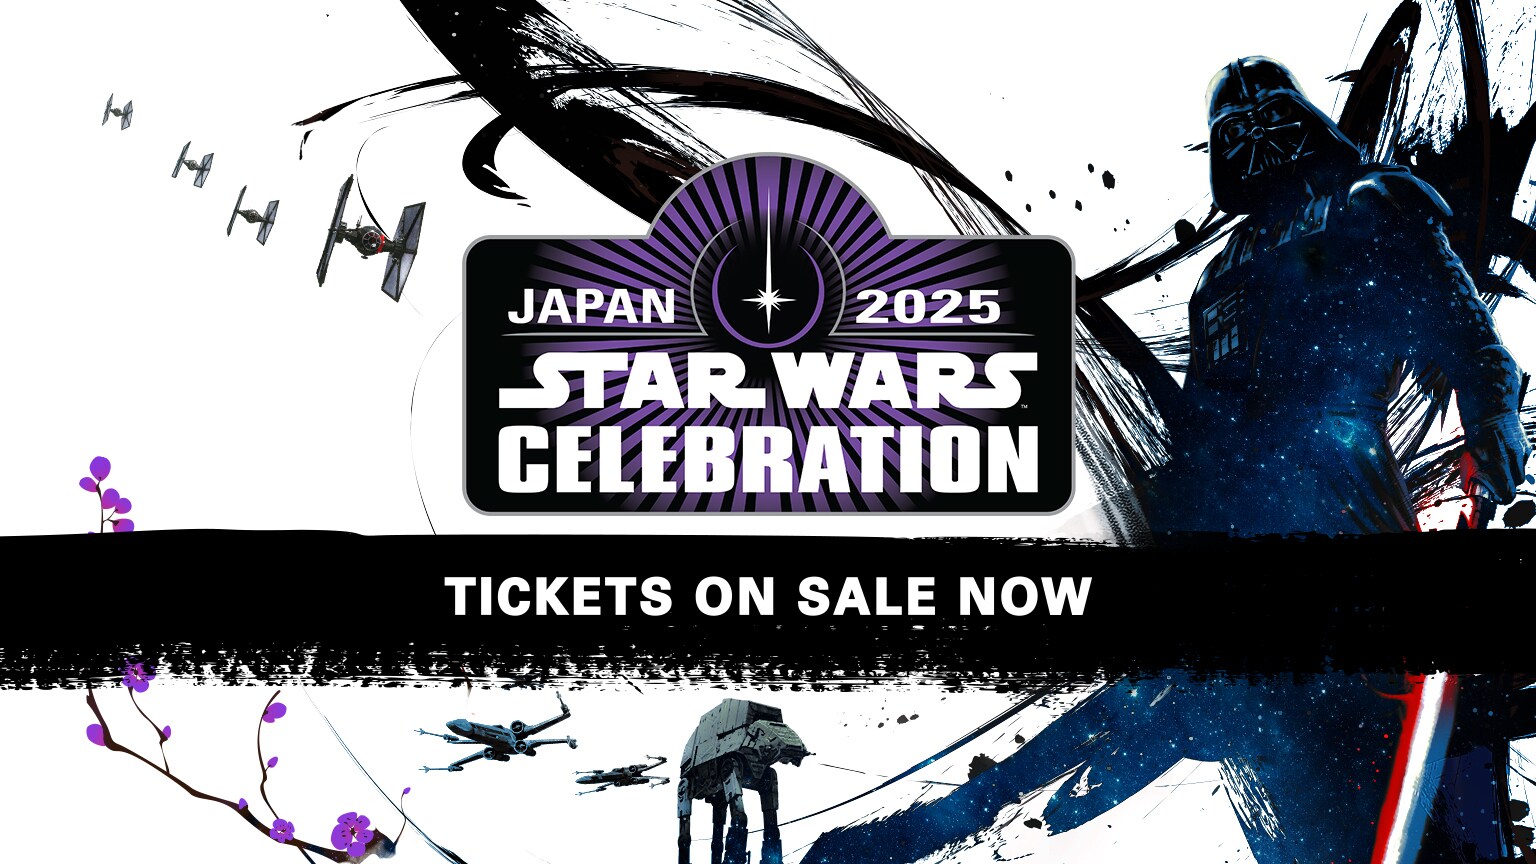 Star Wars Celebration Japan 2025 Tickets On Sale Now